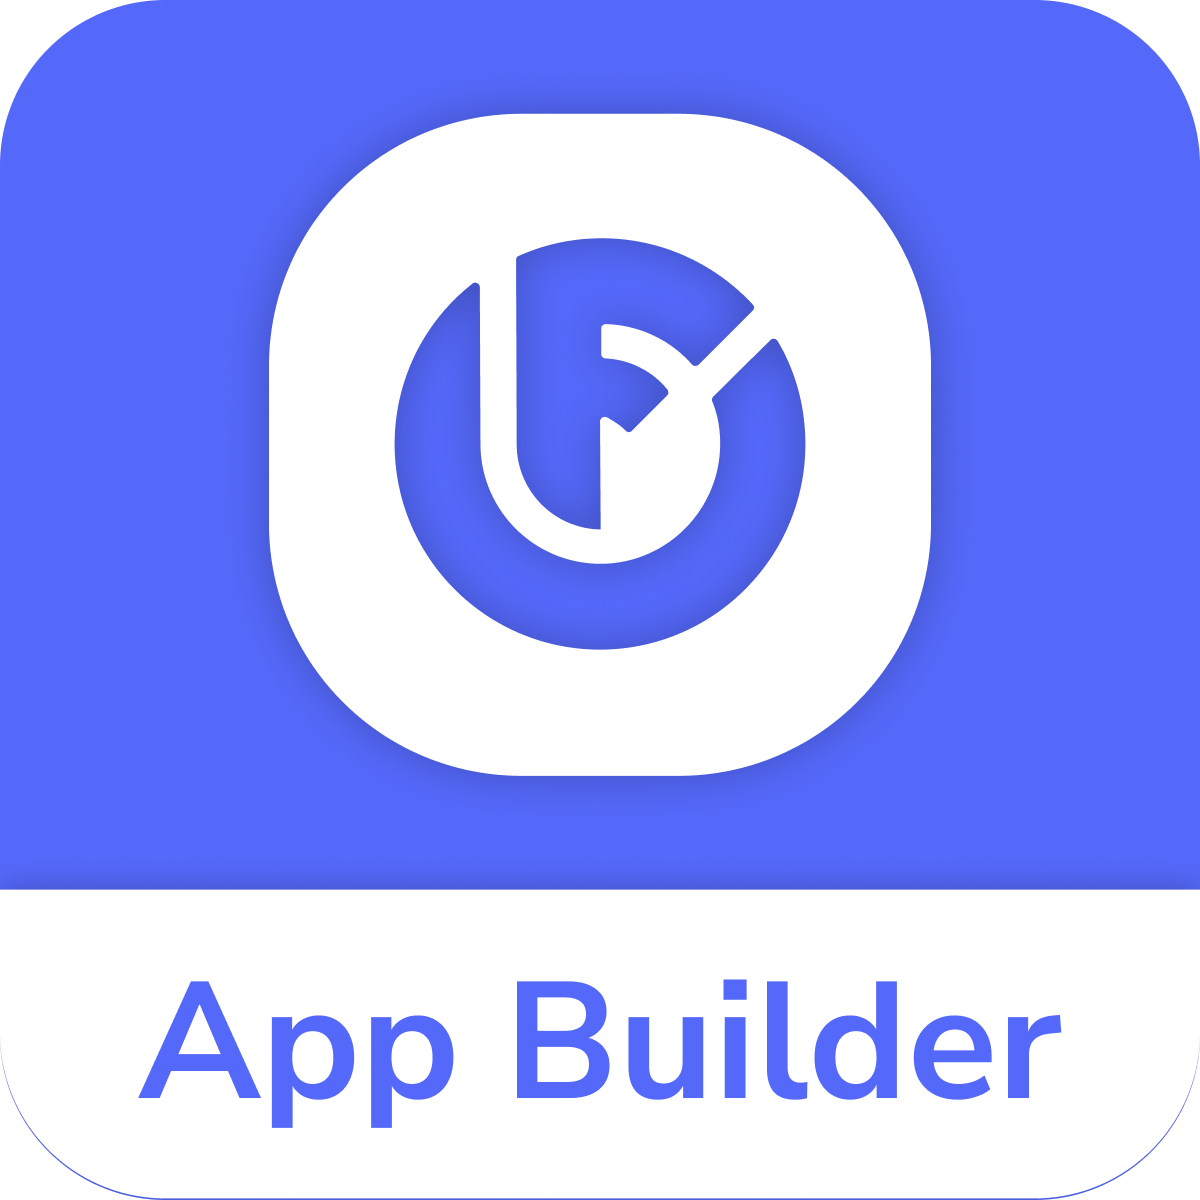 Omniful Mobile App Builder